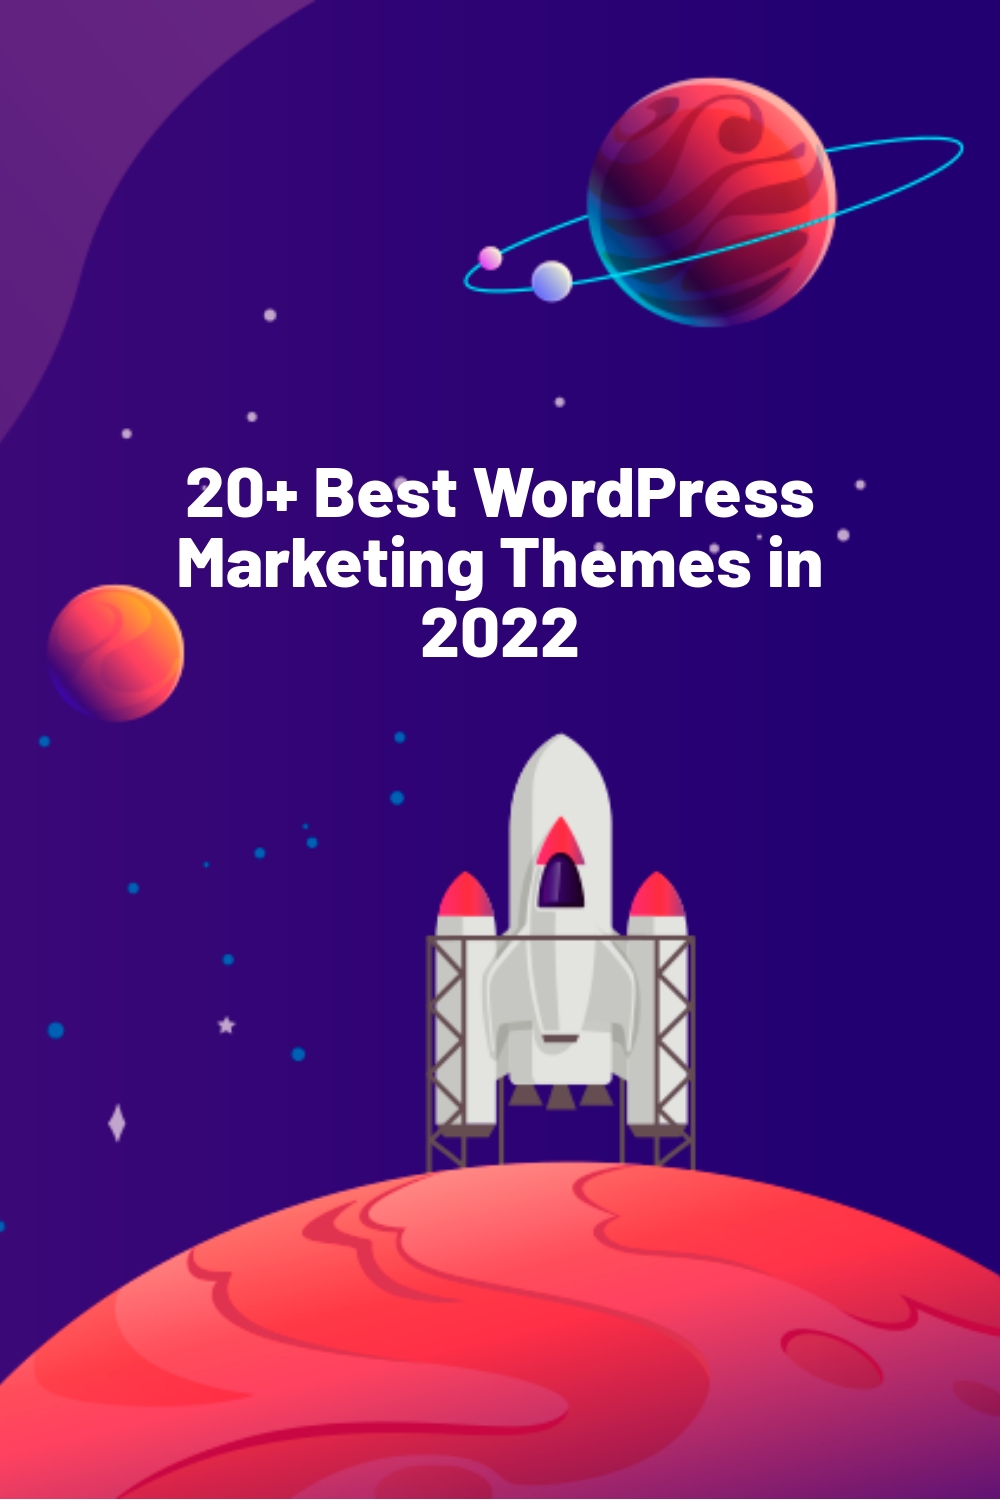 20+ Best WordPress Marketing Themes in 2022